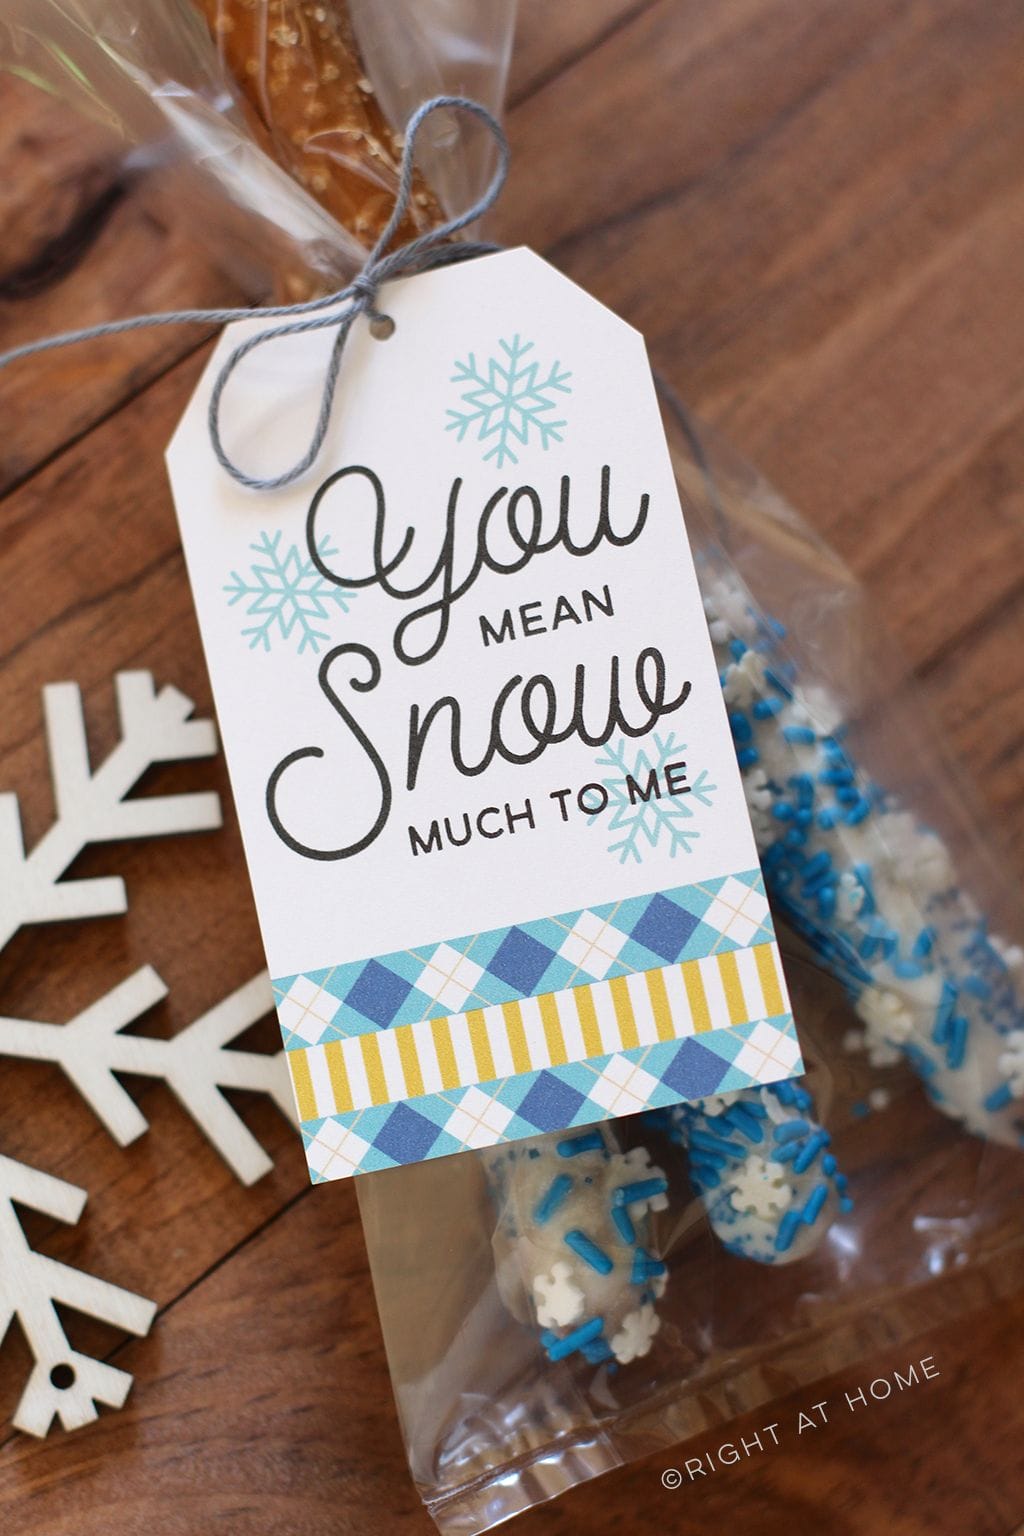 Printable Snowflake Tags + Dipped Pretzels - A yummy neighbor gift idea!